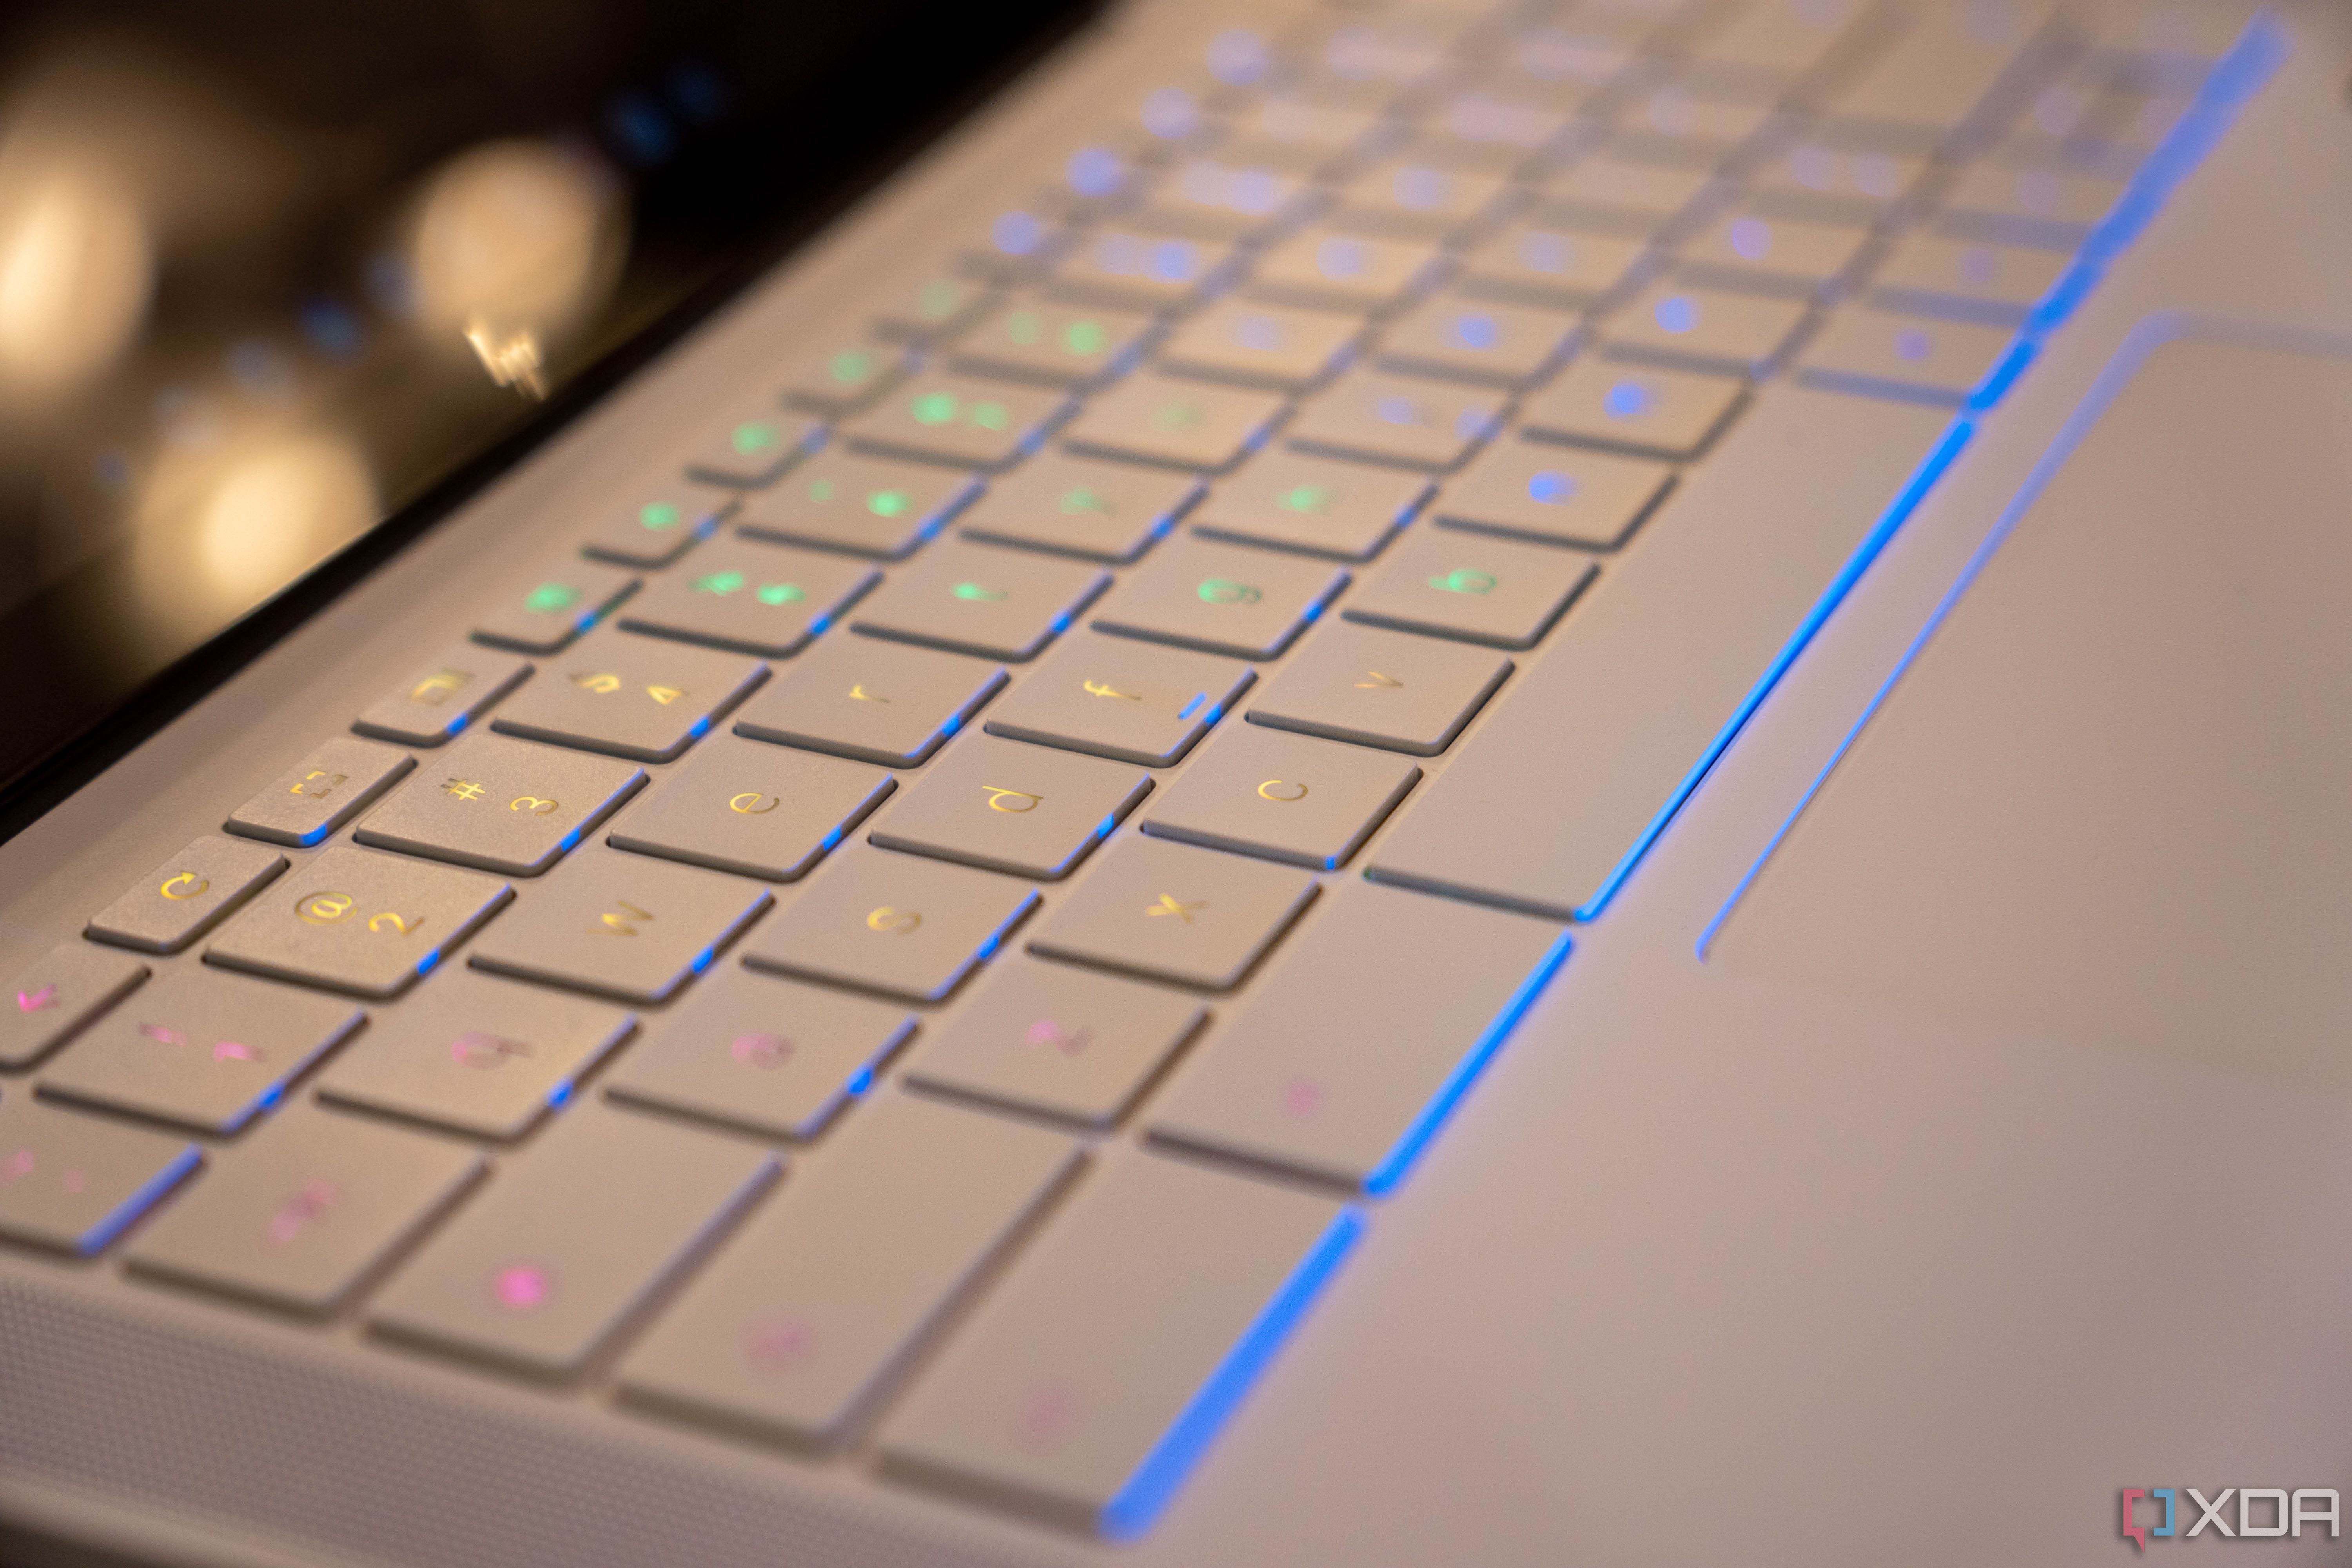 Angled view of white RGB keyboard